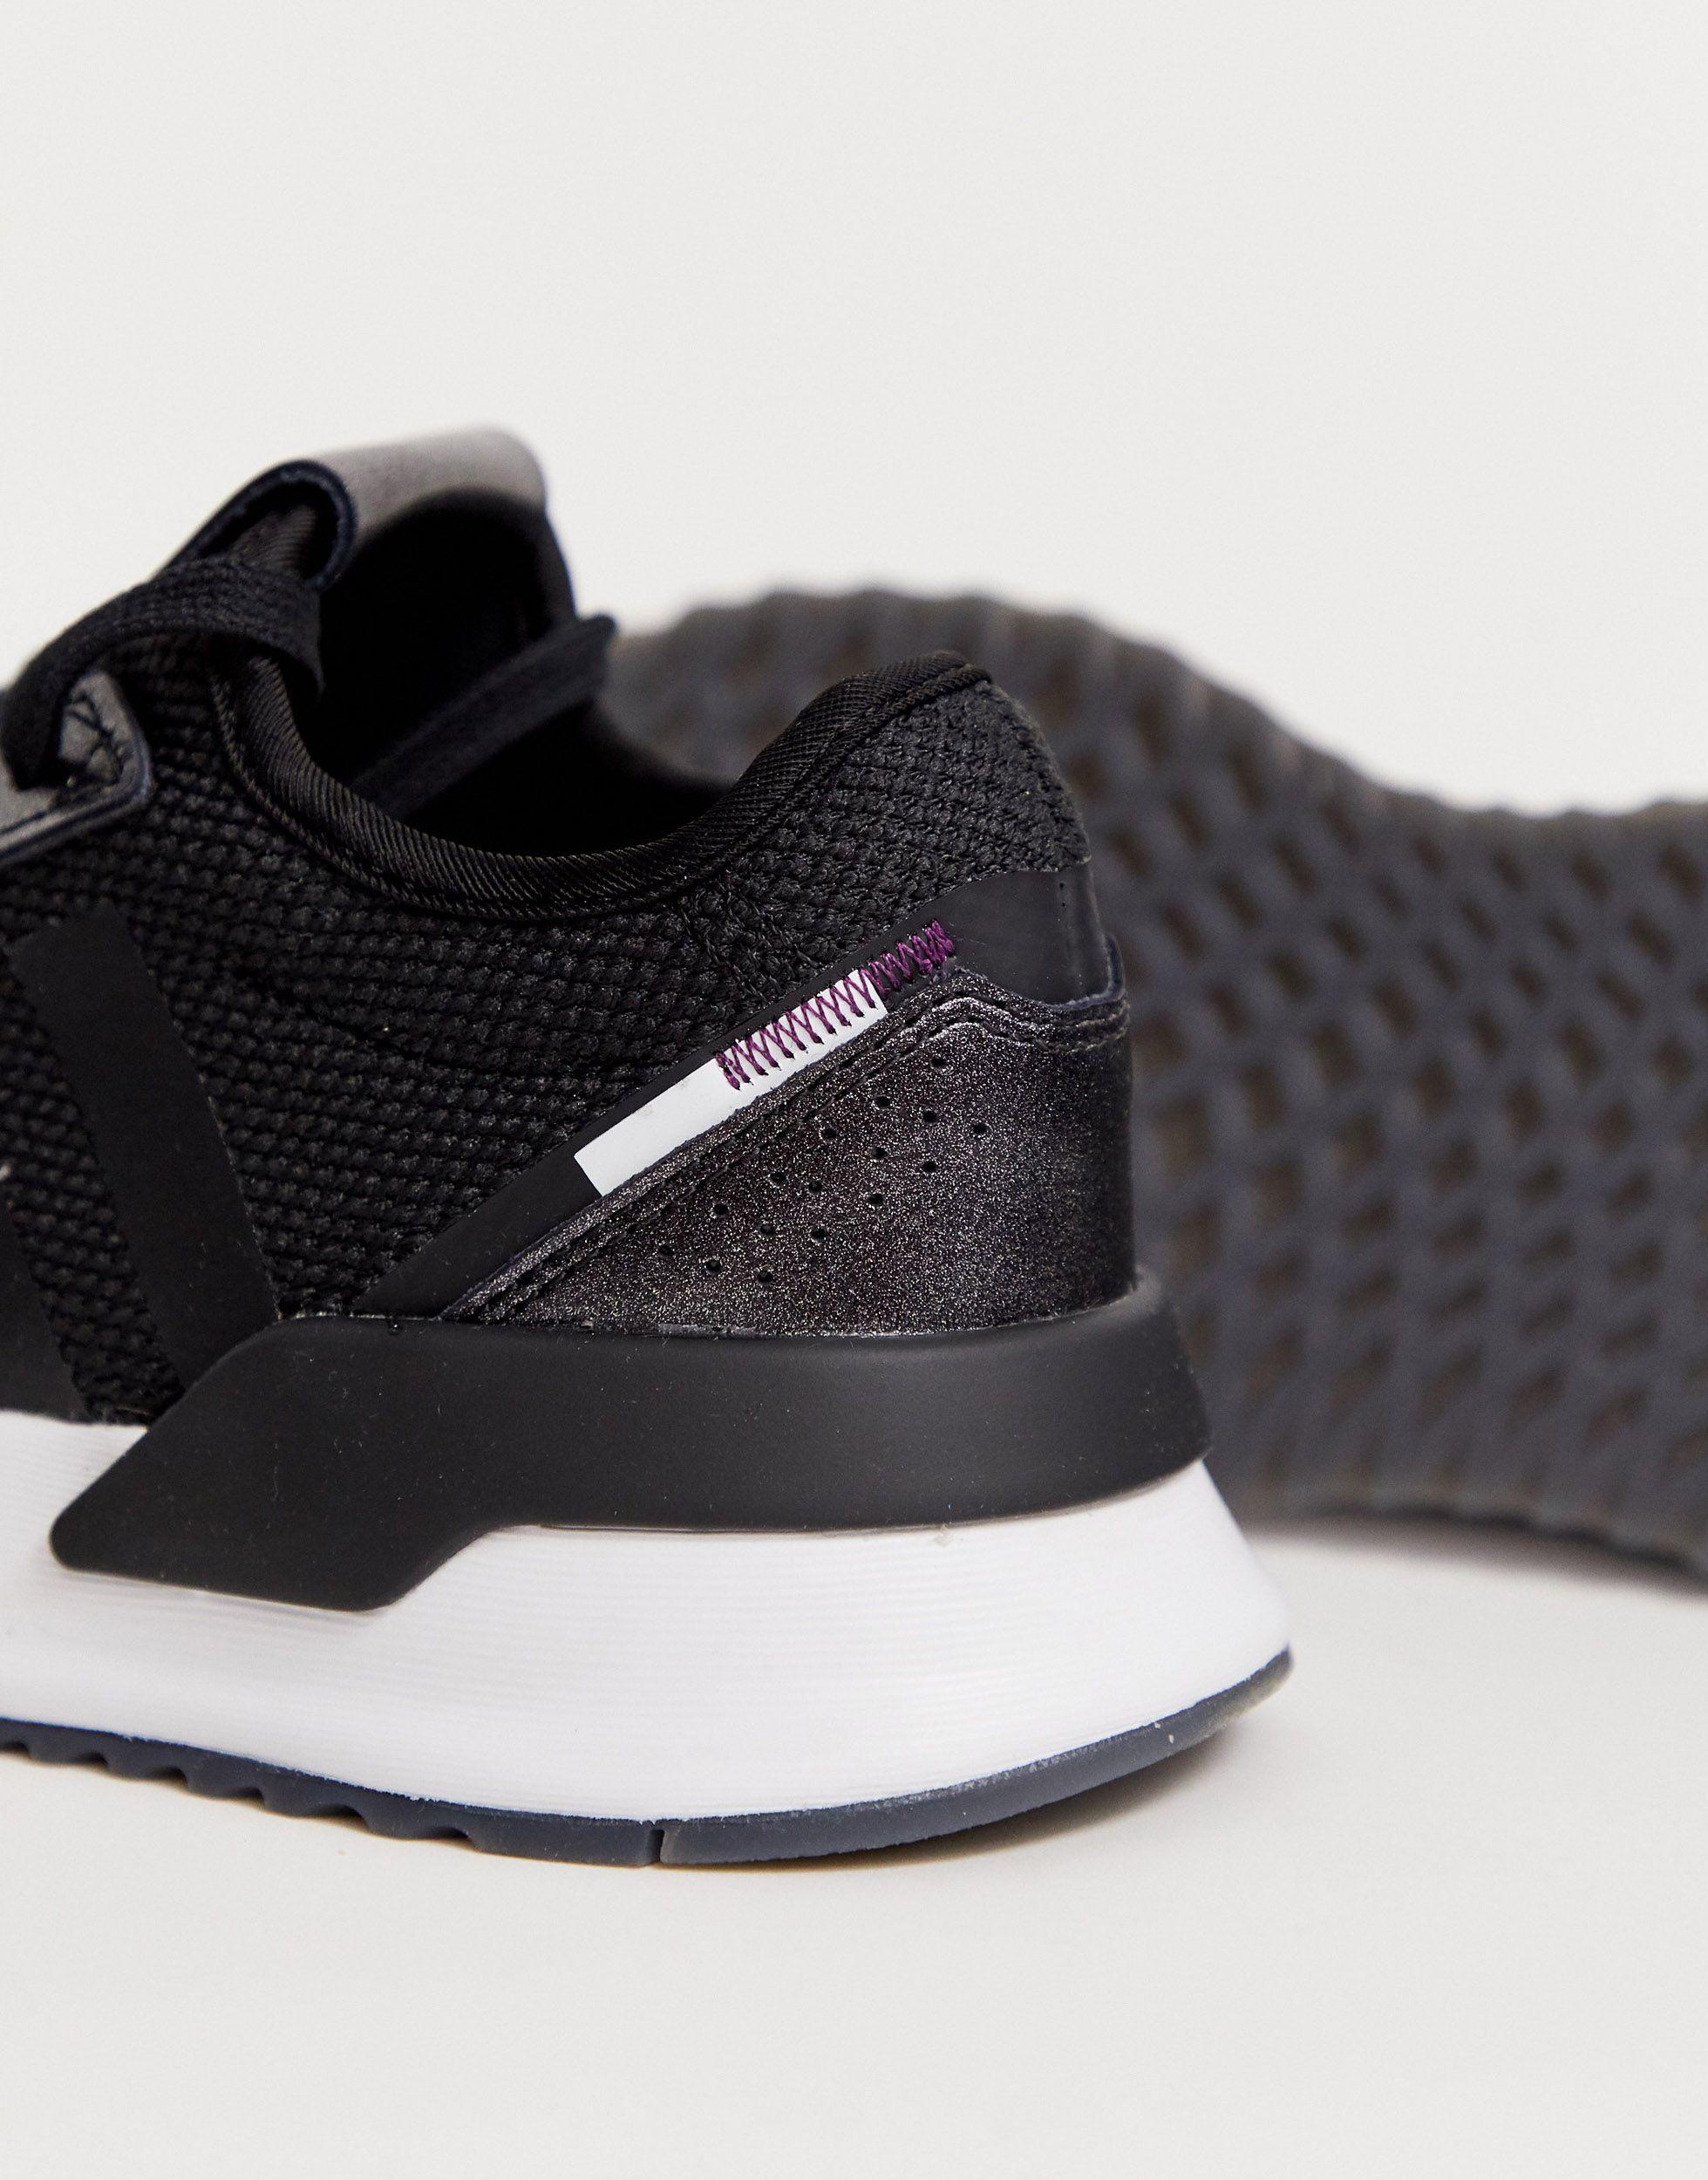 adidas Originals Leather U Path X in Black/White/Purple (Black) | Lyst